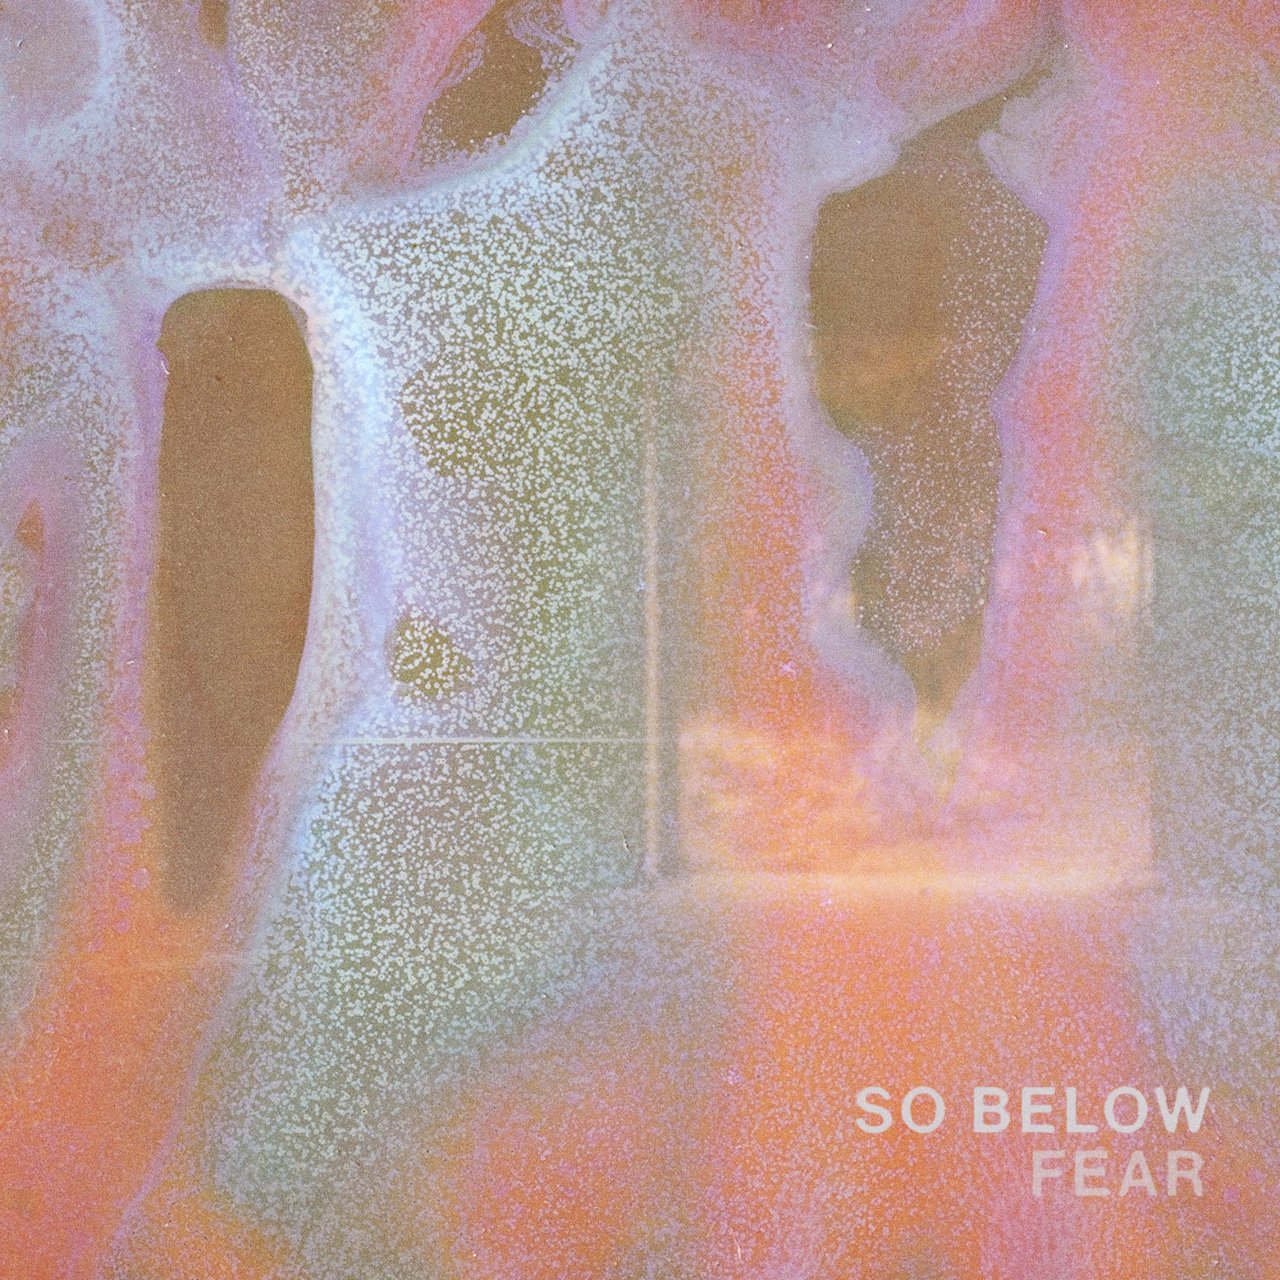 So Below Fear cover artwork